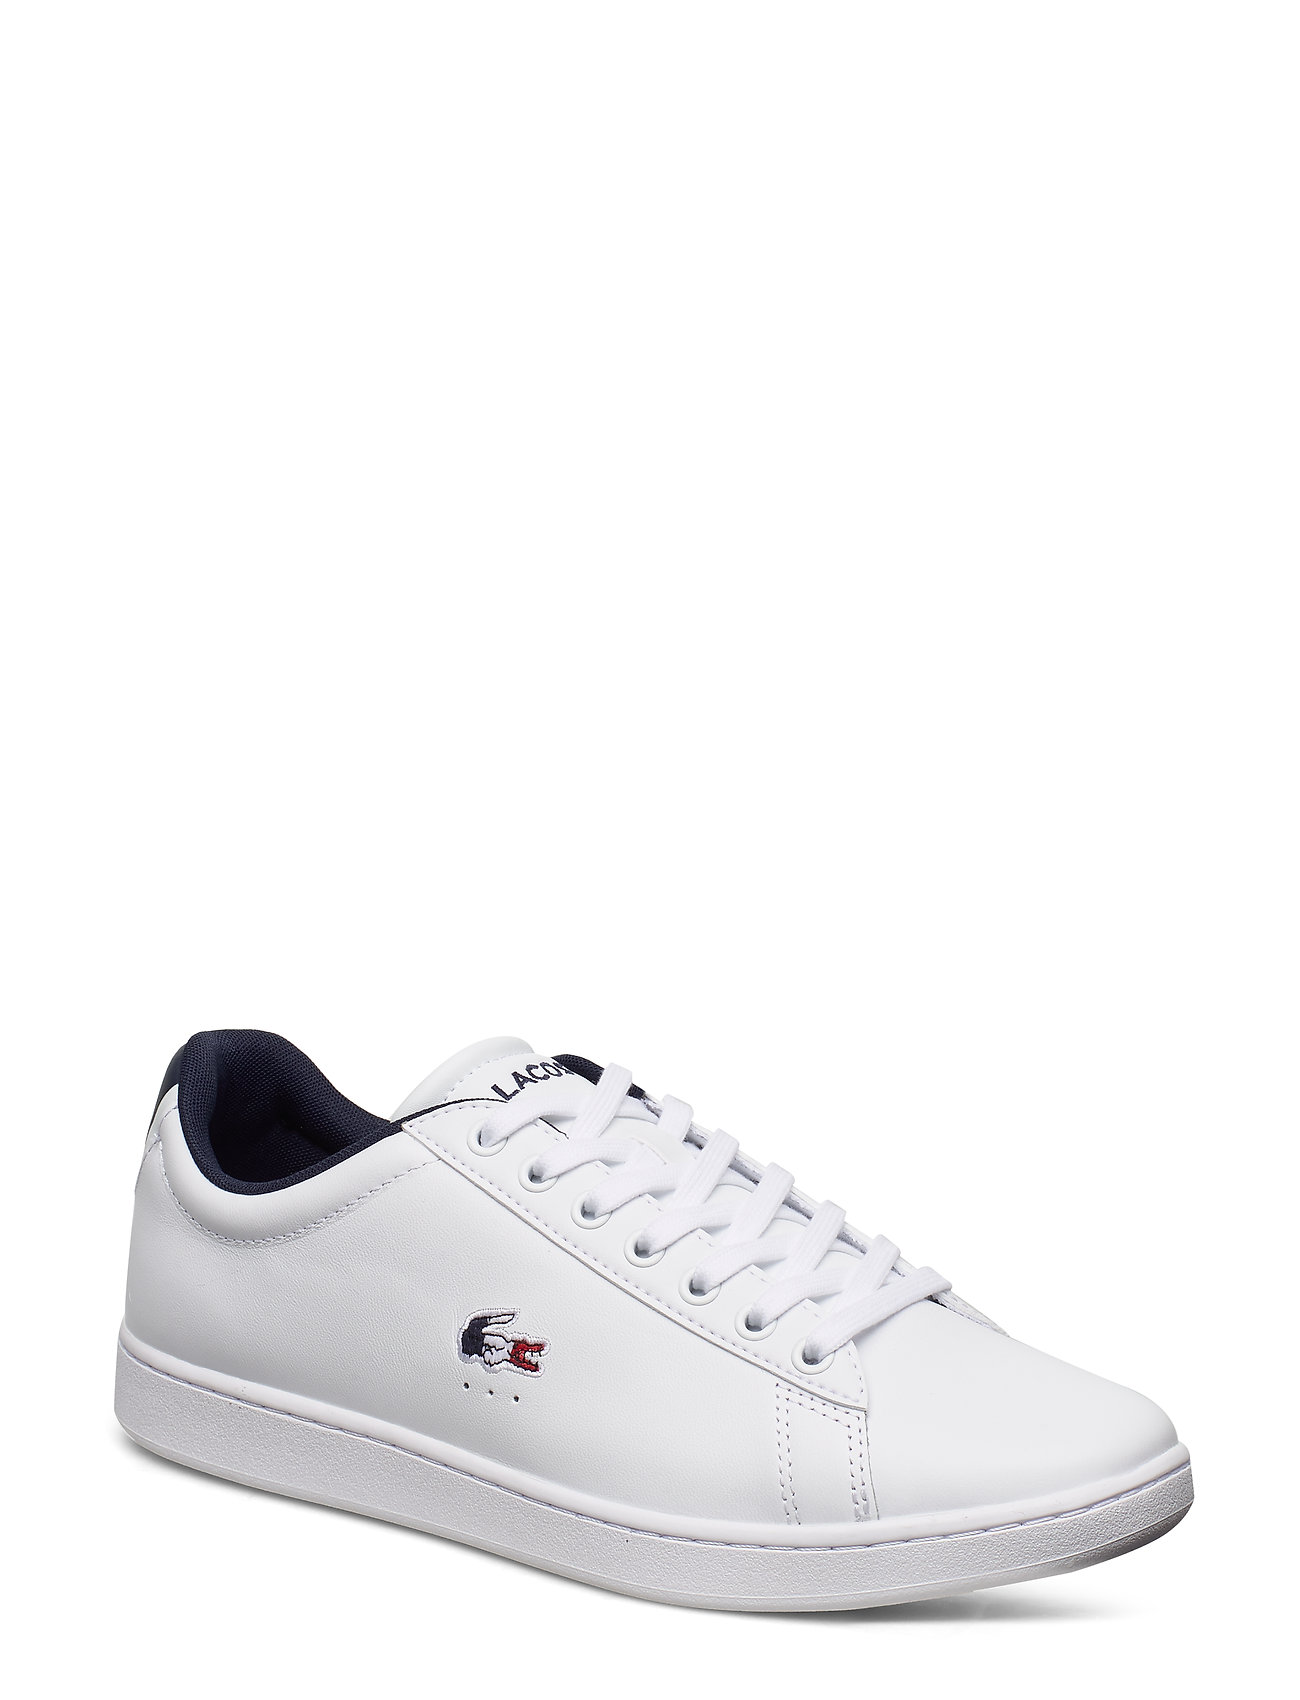 Carnaby Evo Tri1 Sma Matalavartiset Sneakerit Tennarit Valkoinen Lacoste Shoes